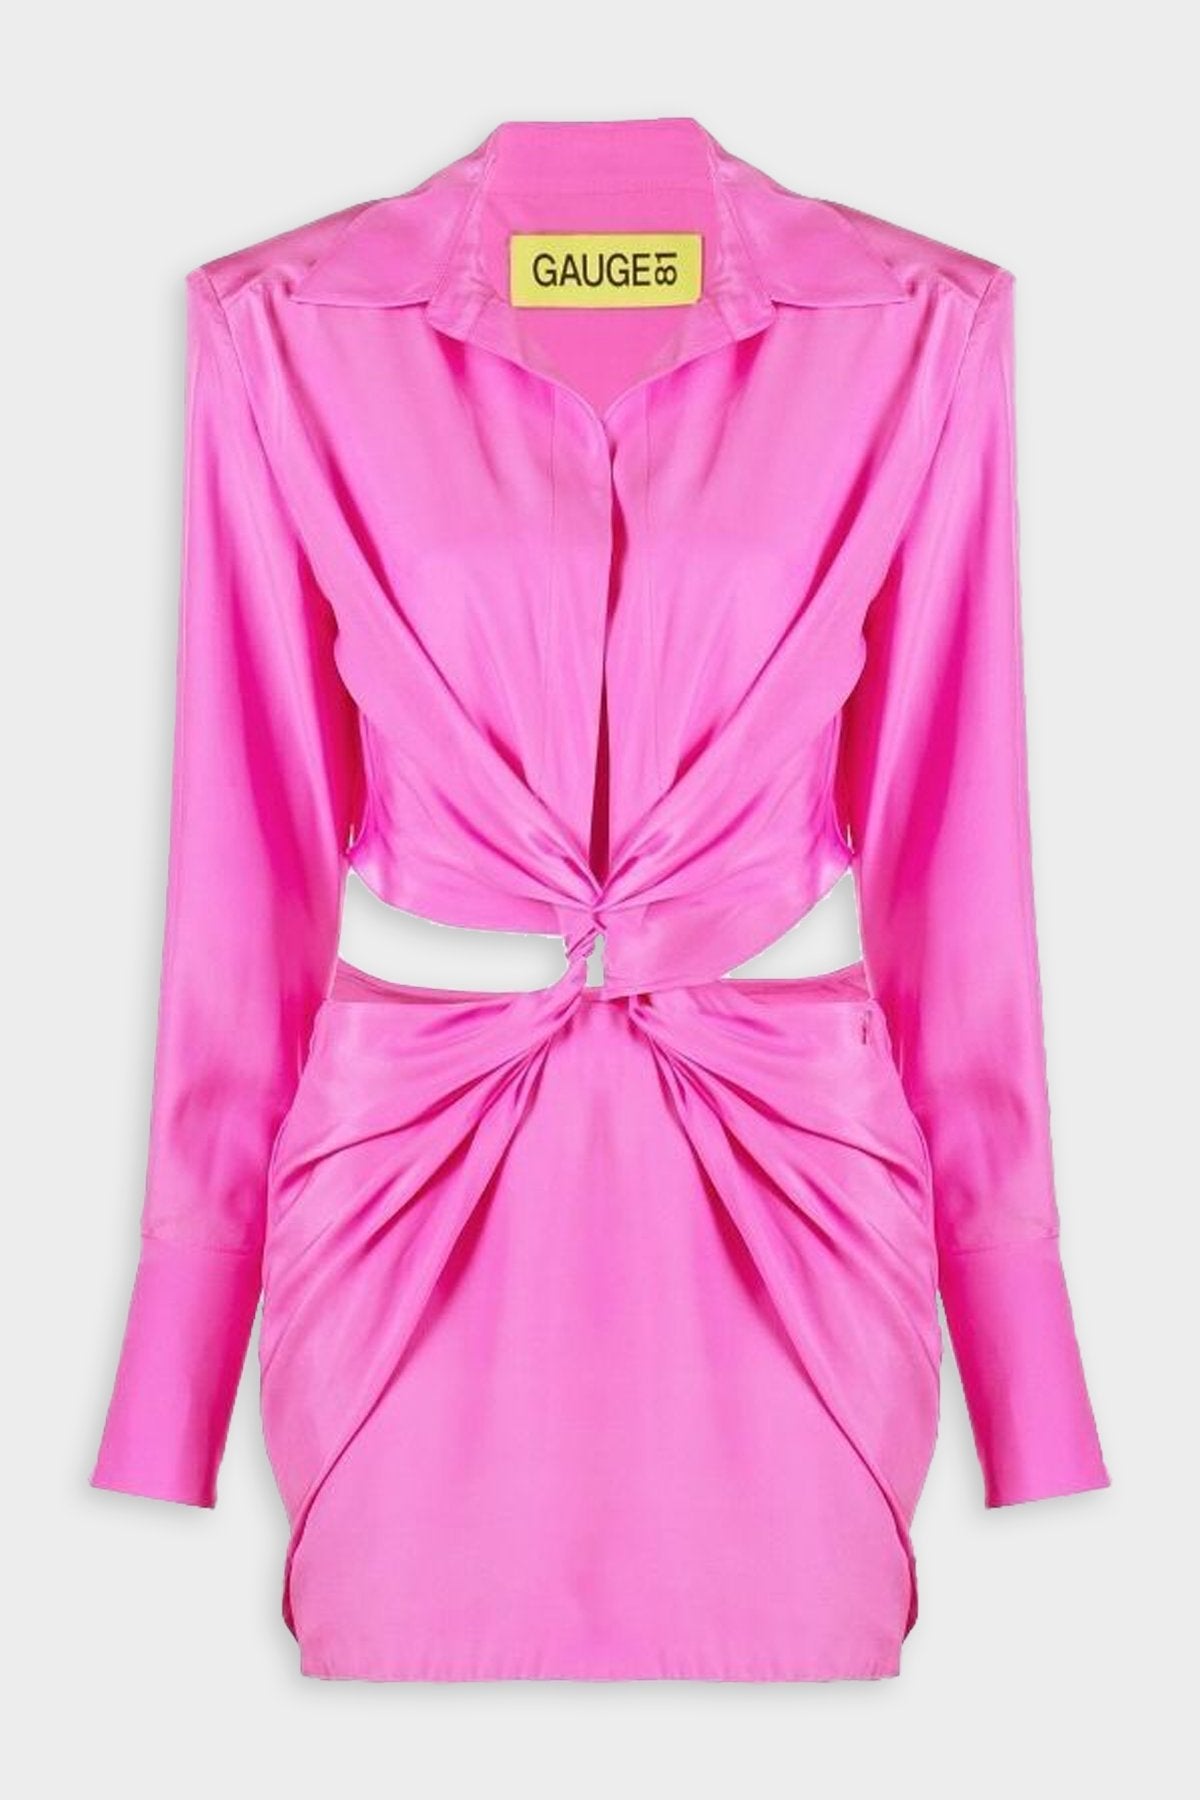 Tokai Dress in Hot Pink - shop-olivia.com